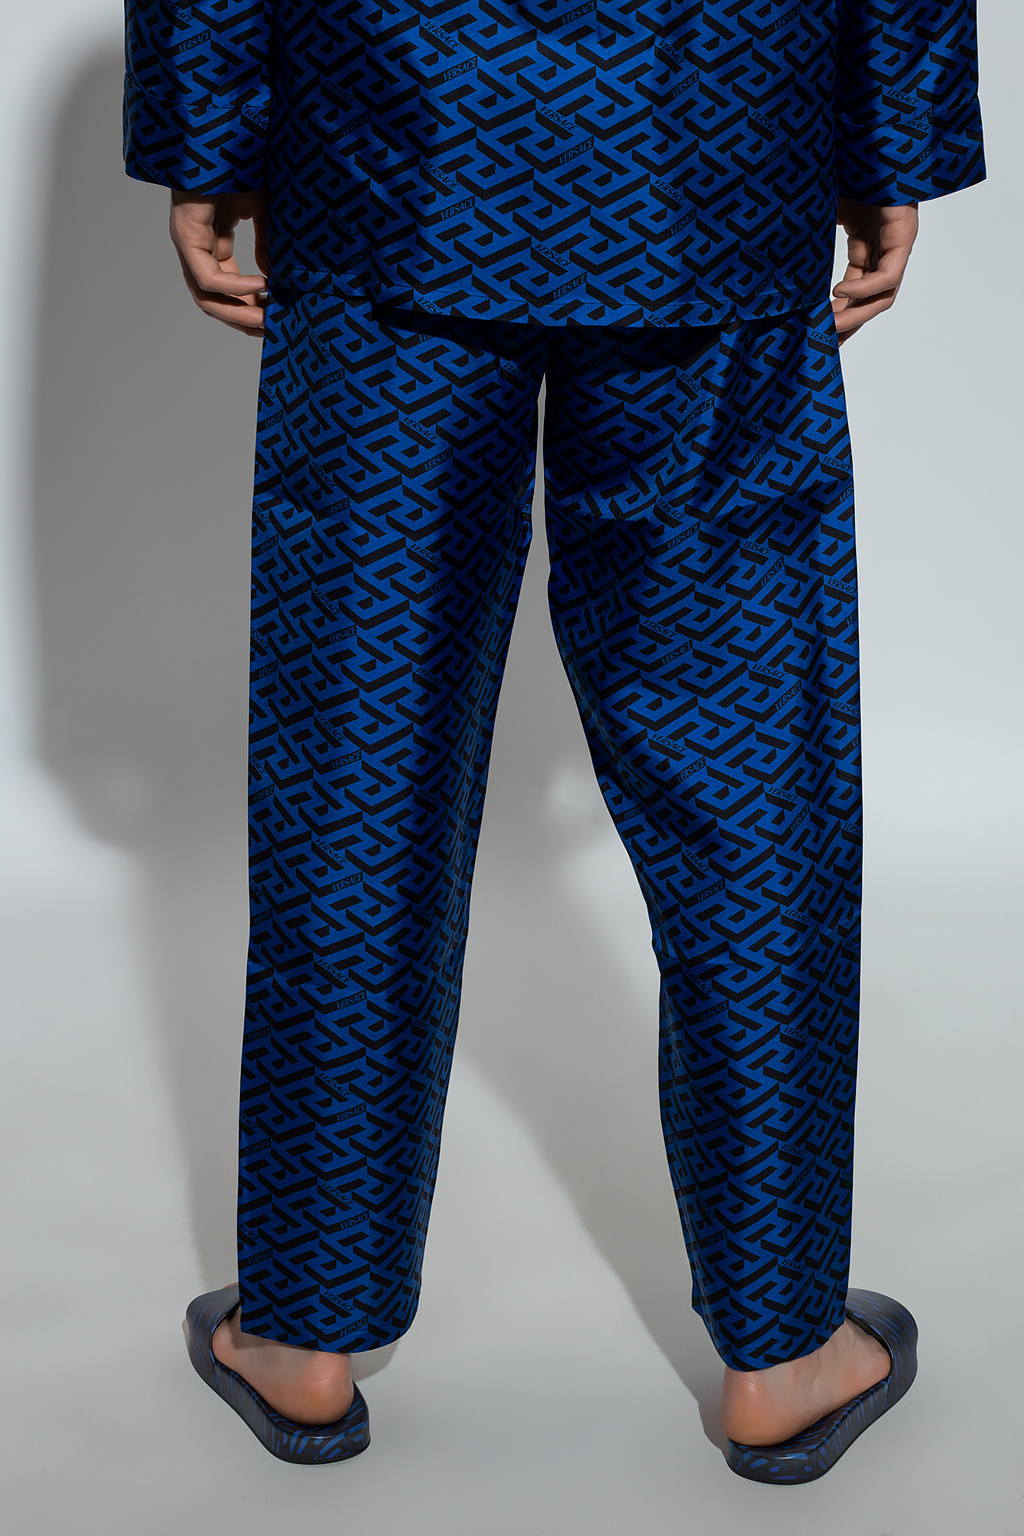 Versace Pyjama bottom